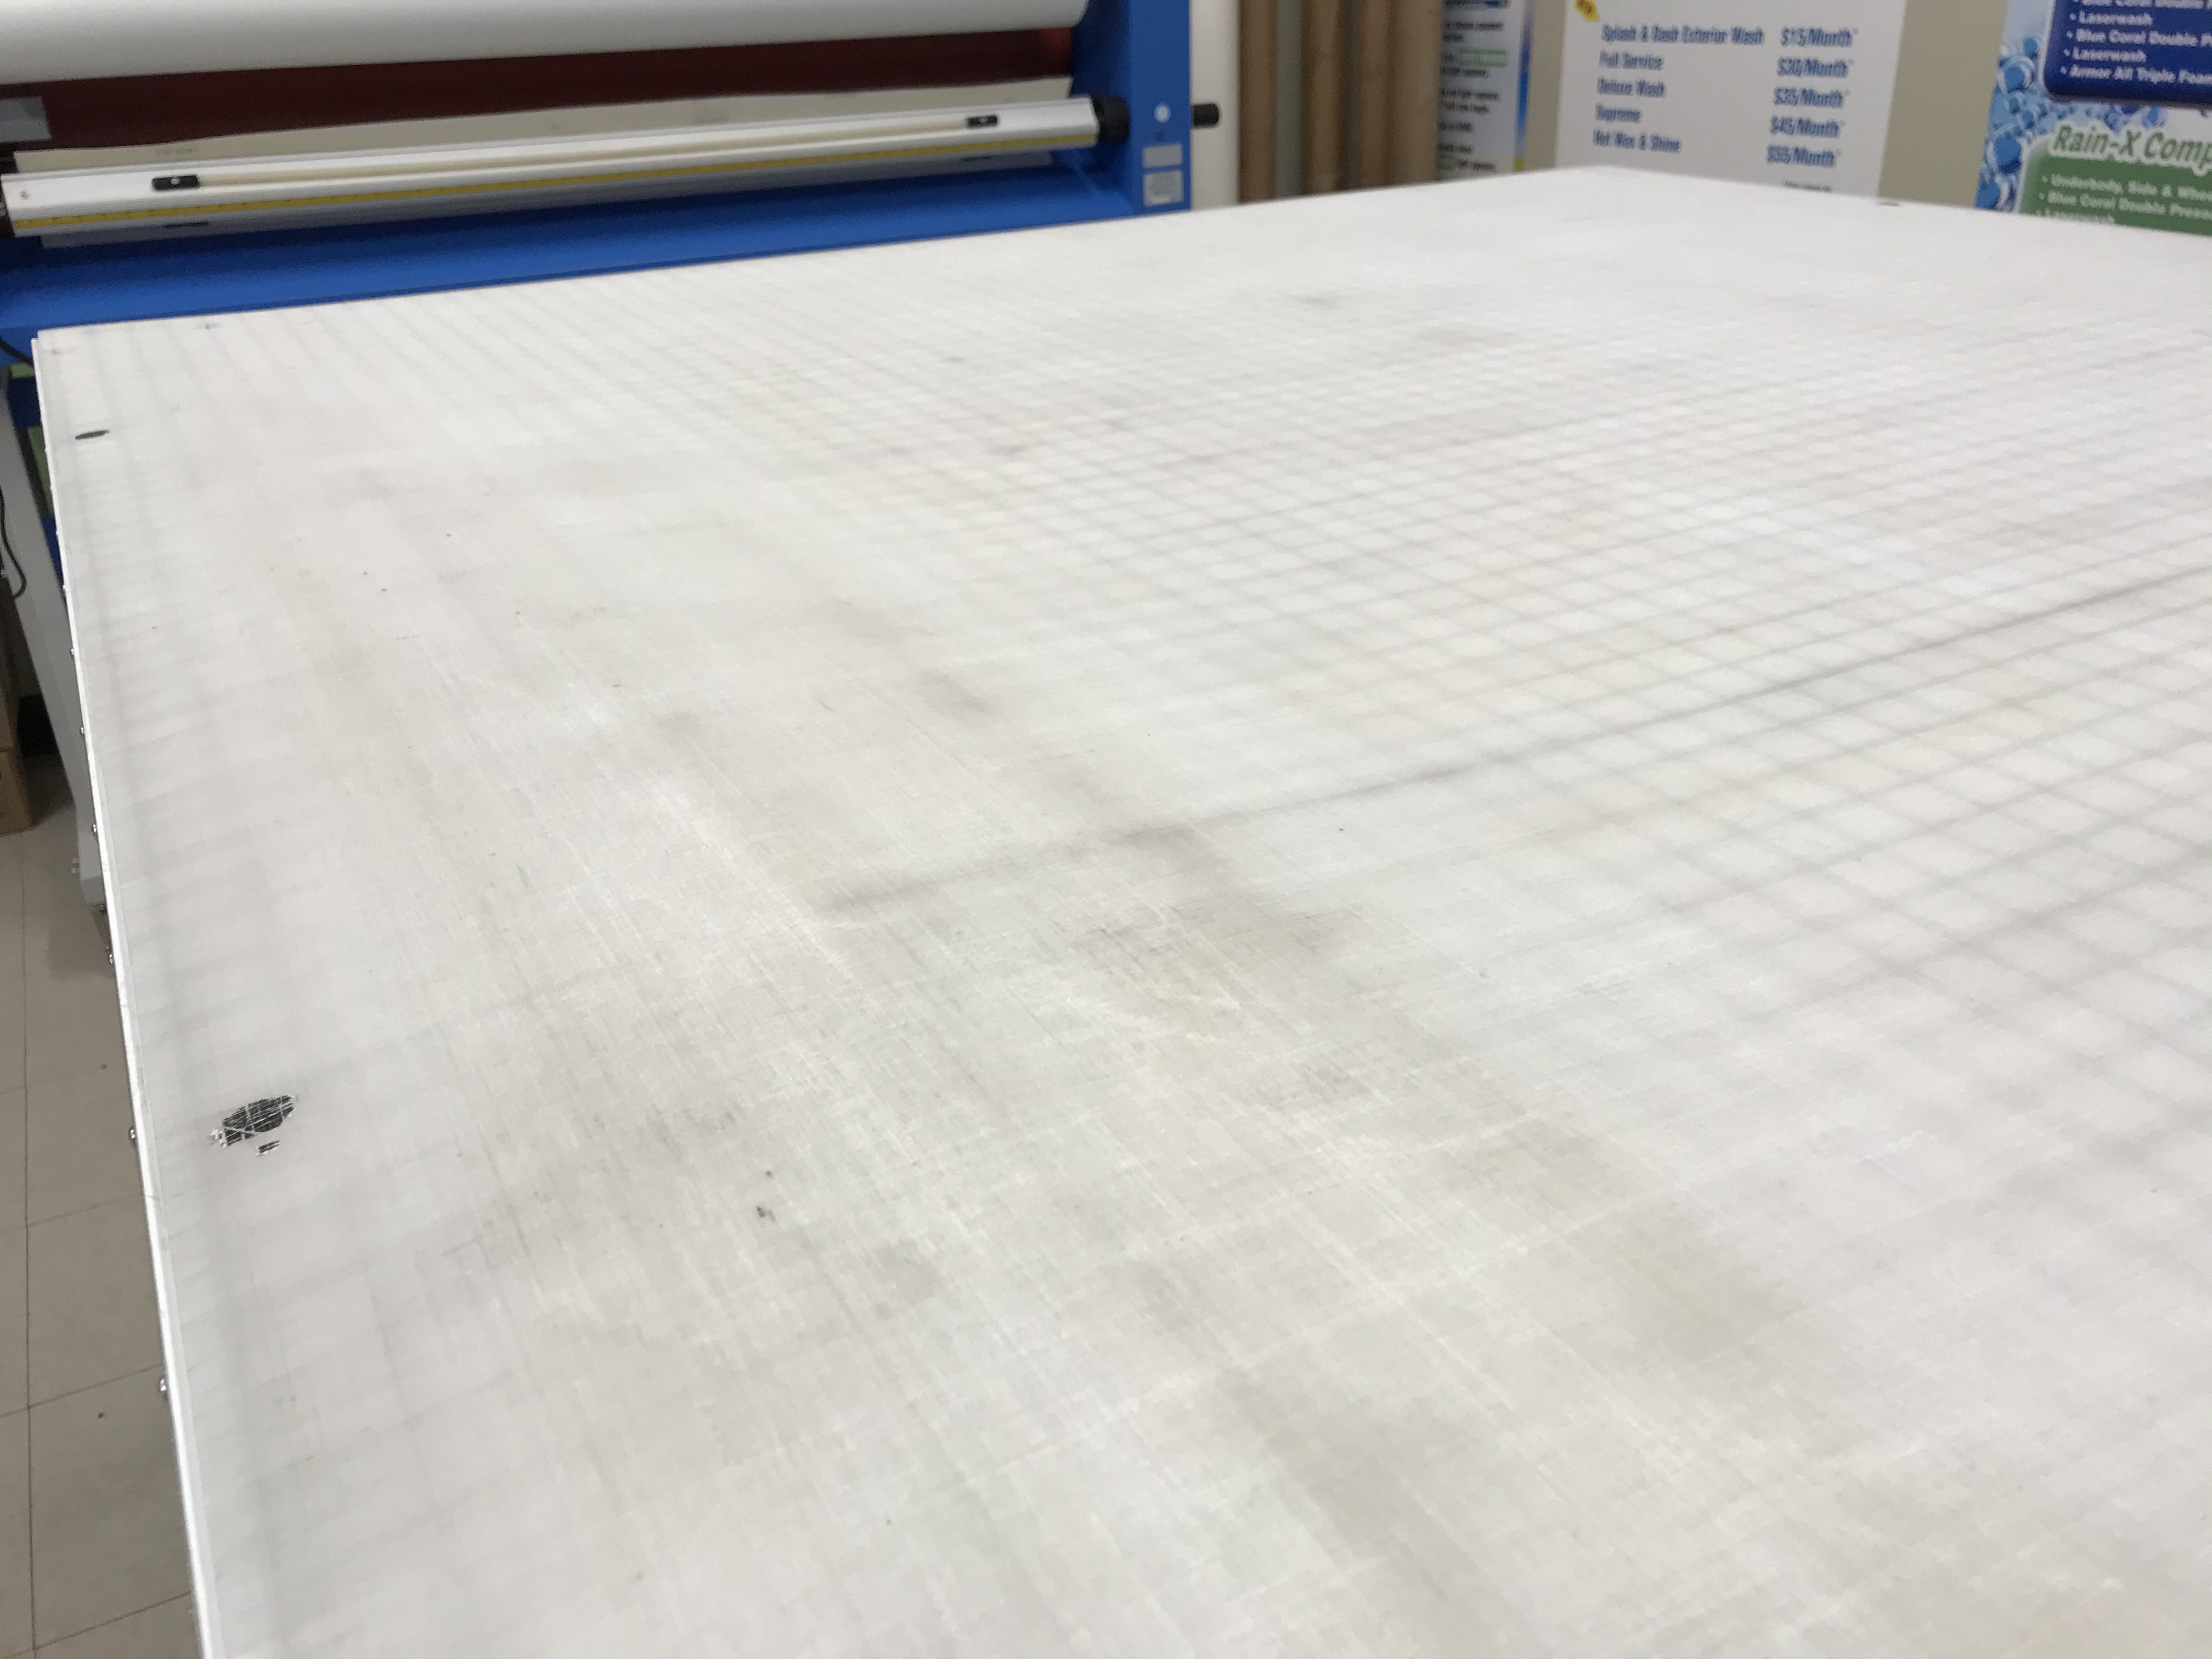 4' x 6' Rhino Self-Healing Large Cutting Mat with Direct Print Grid